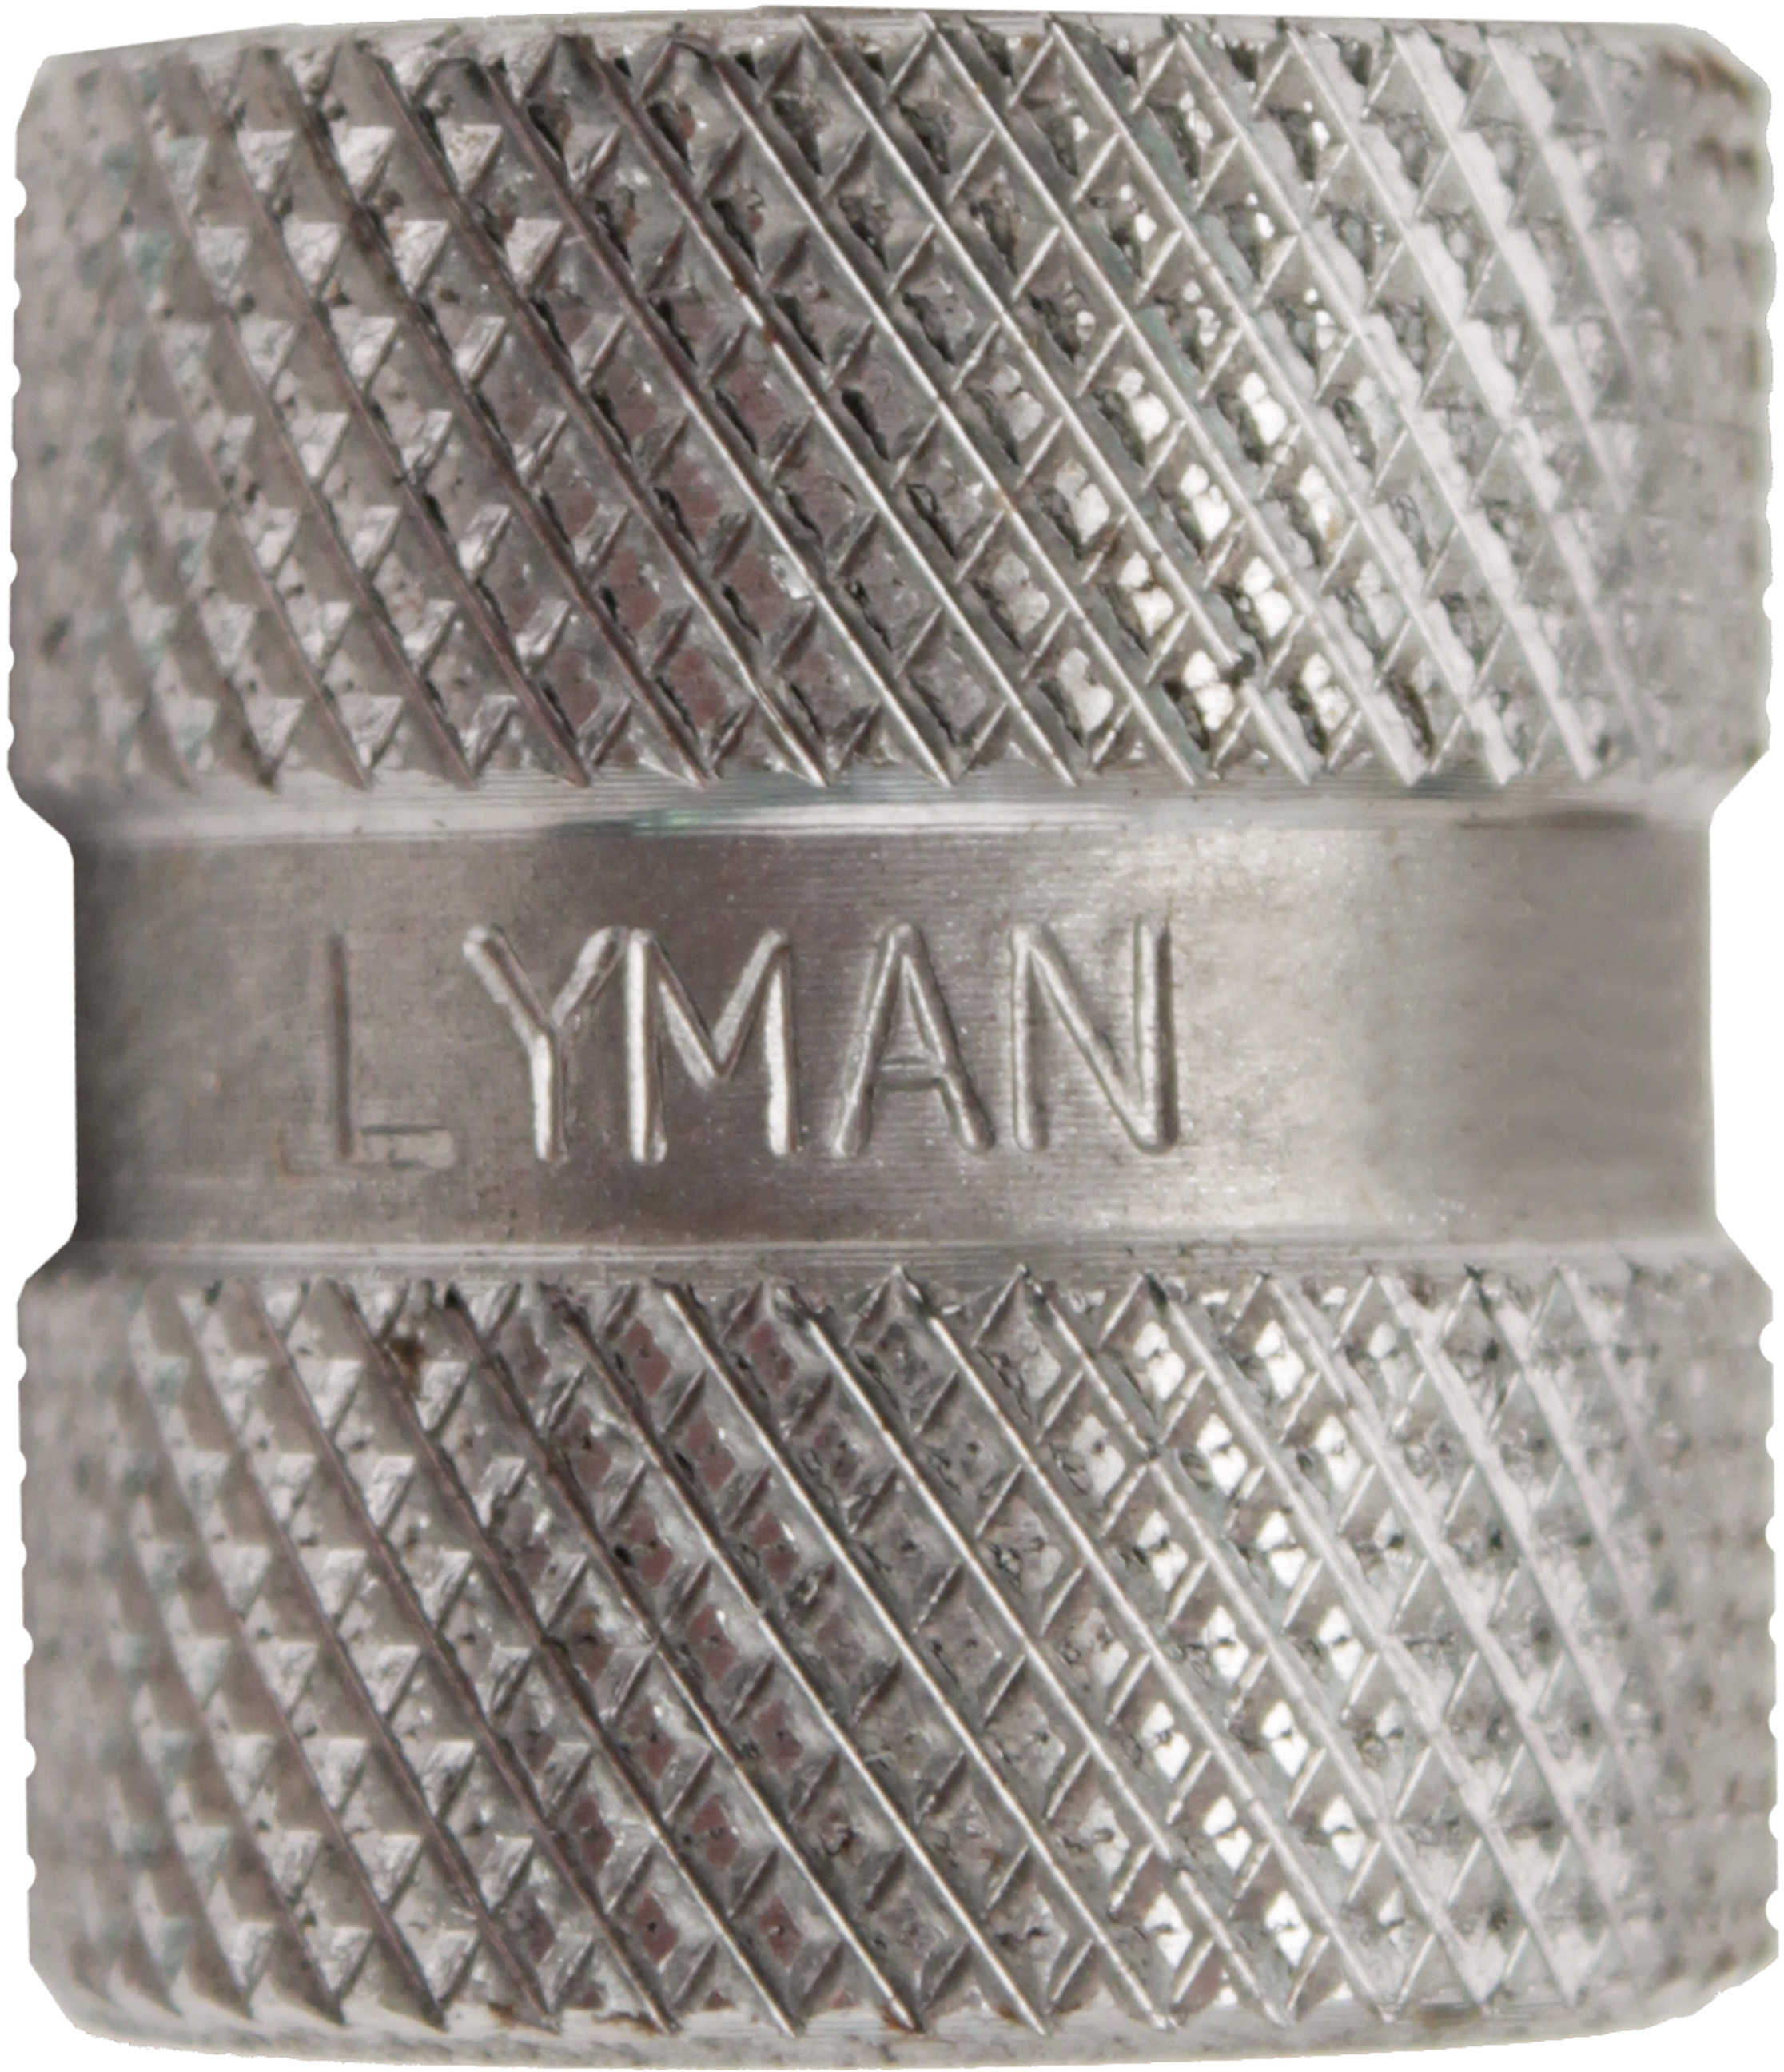 Lyman 9mm Luger Pistol Max Cartridge Gauge Md: 7832330